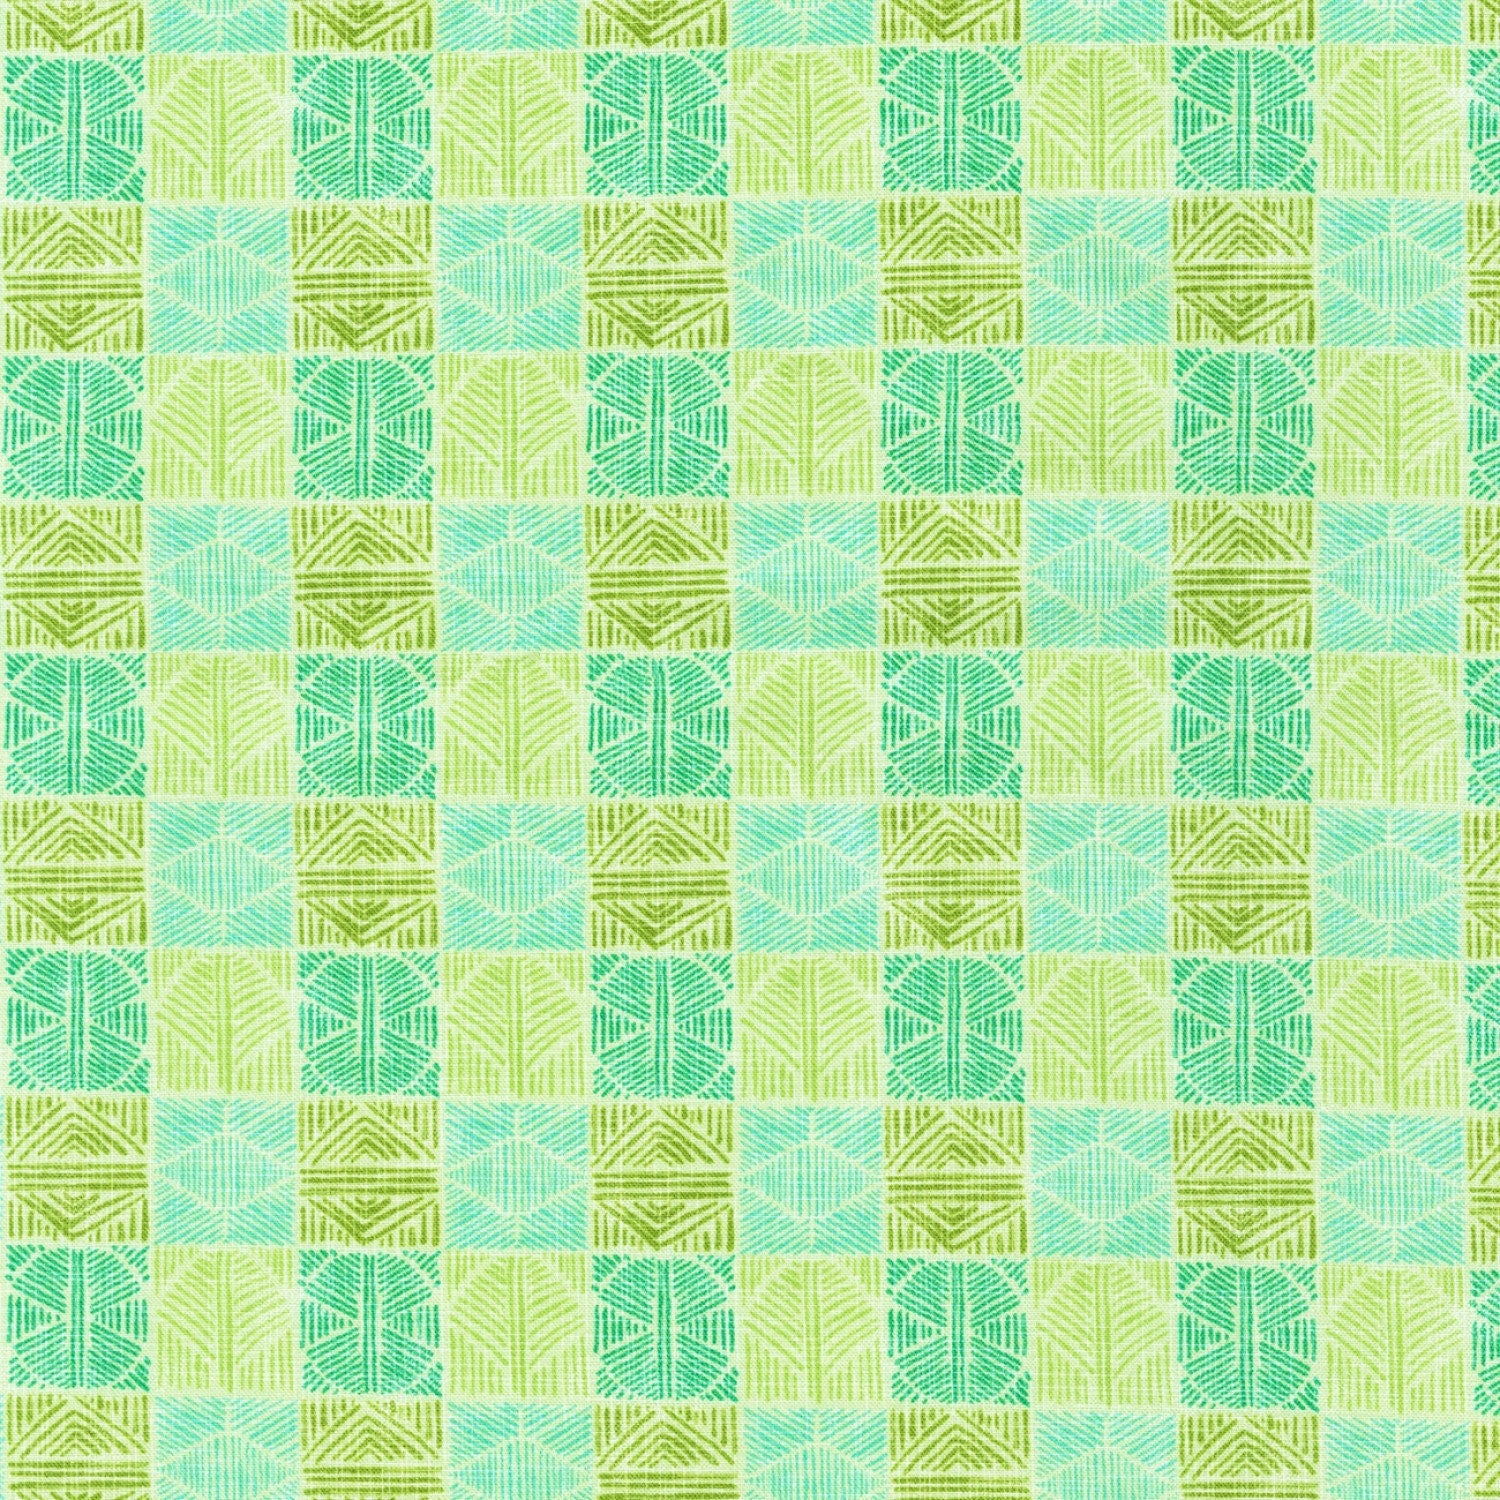 LAST CALL Horizon Ten Square, Robert Kaufman TEN-1110-42, 10" Inch Precut Fabric Squares, Multicolored Leaves Feathers Floral Fabric